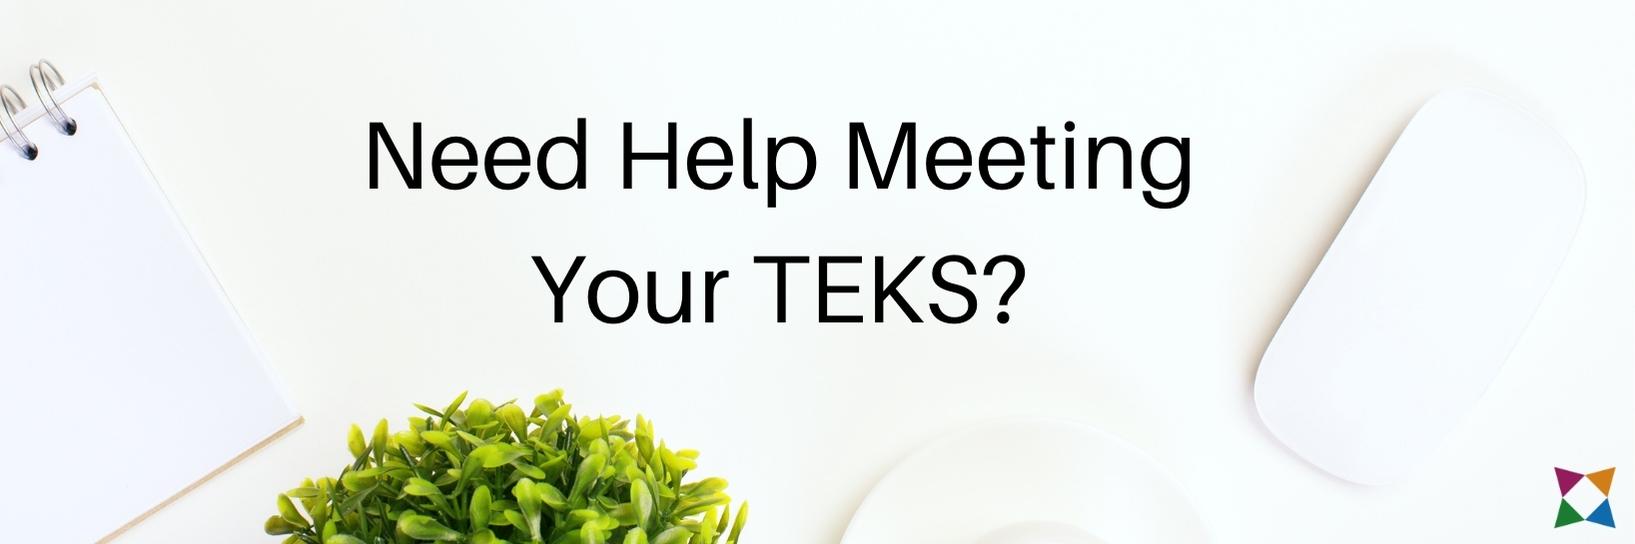 help-meeting-teks-requirements